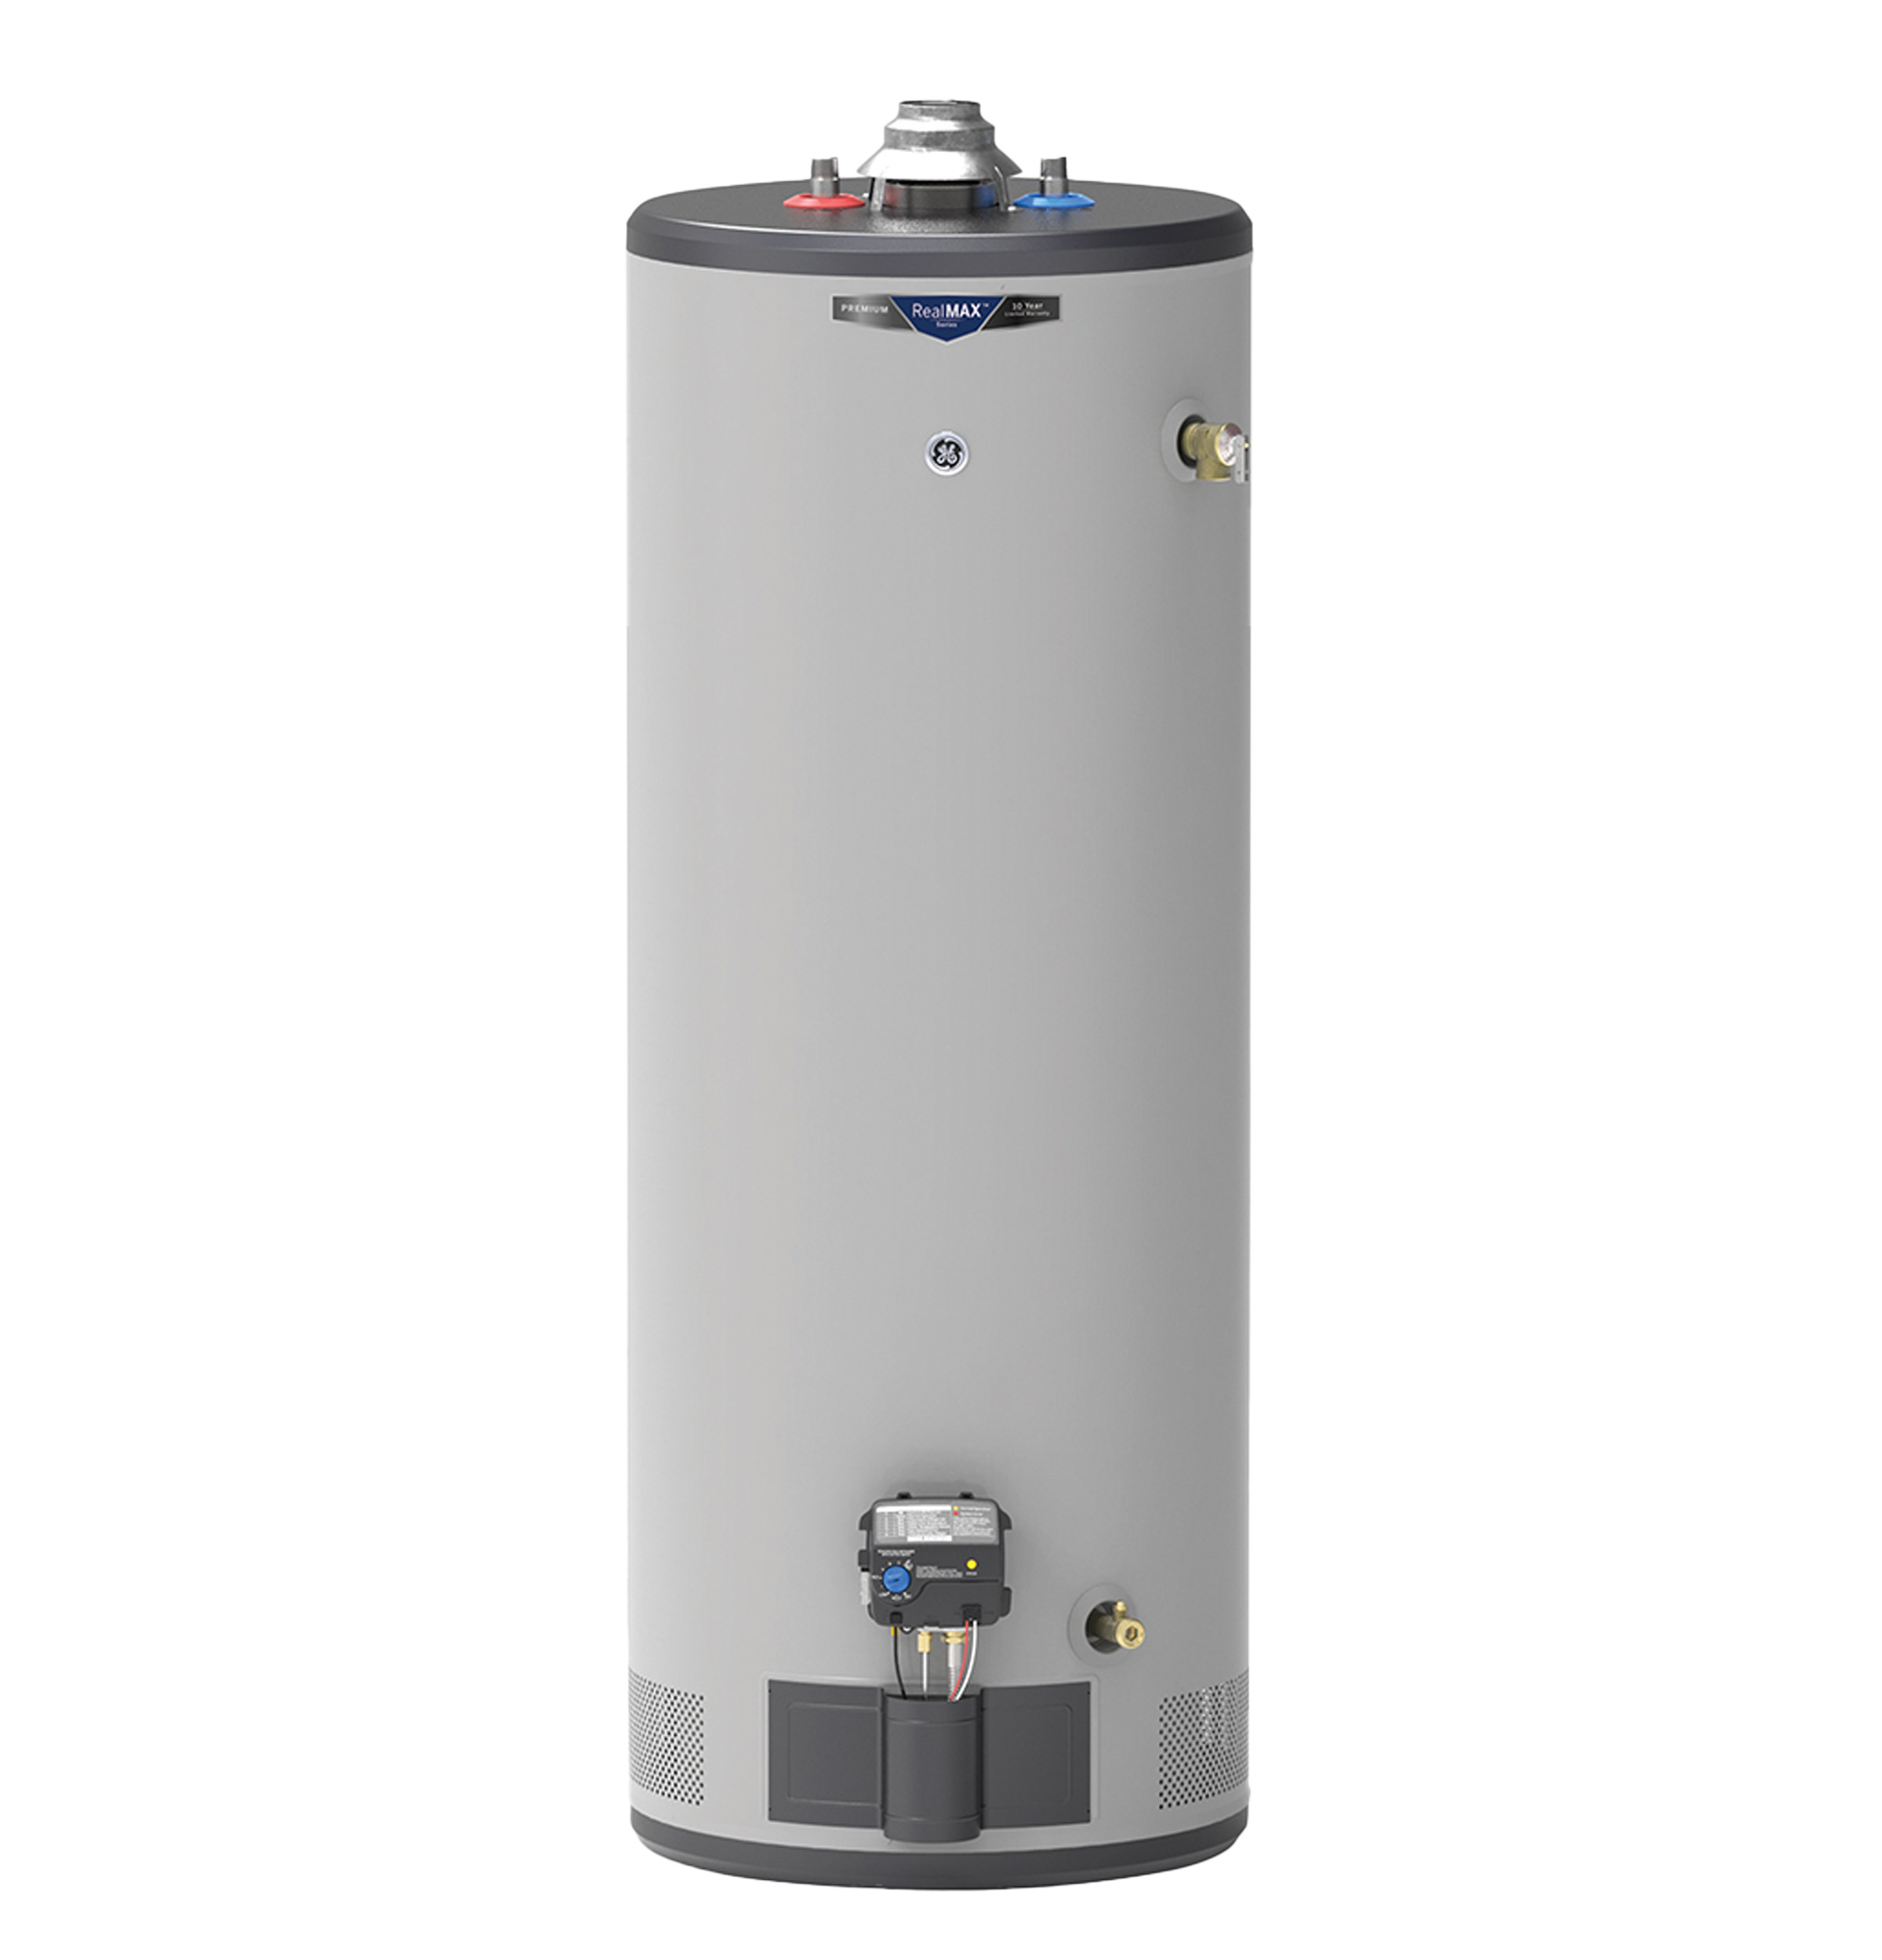 GE RealMAX Premium 50-Gallon Tall Liquid Propane Atmospheric Water Heater